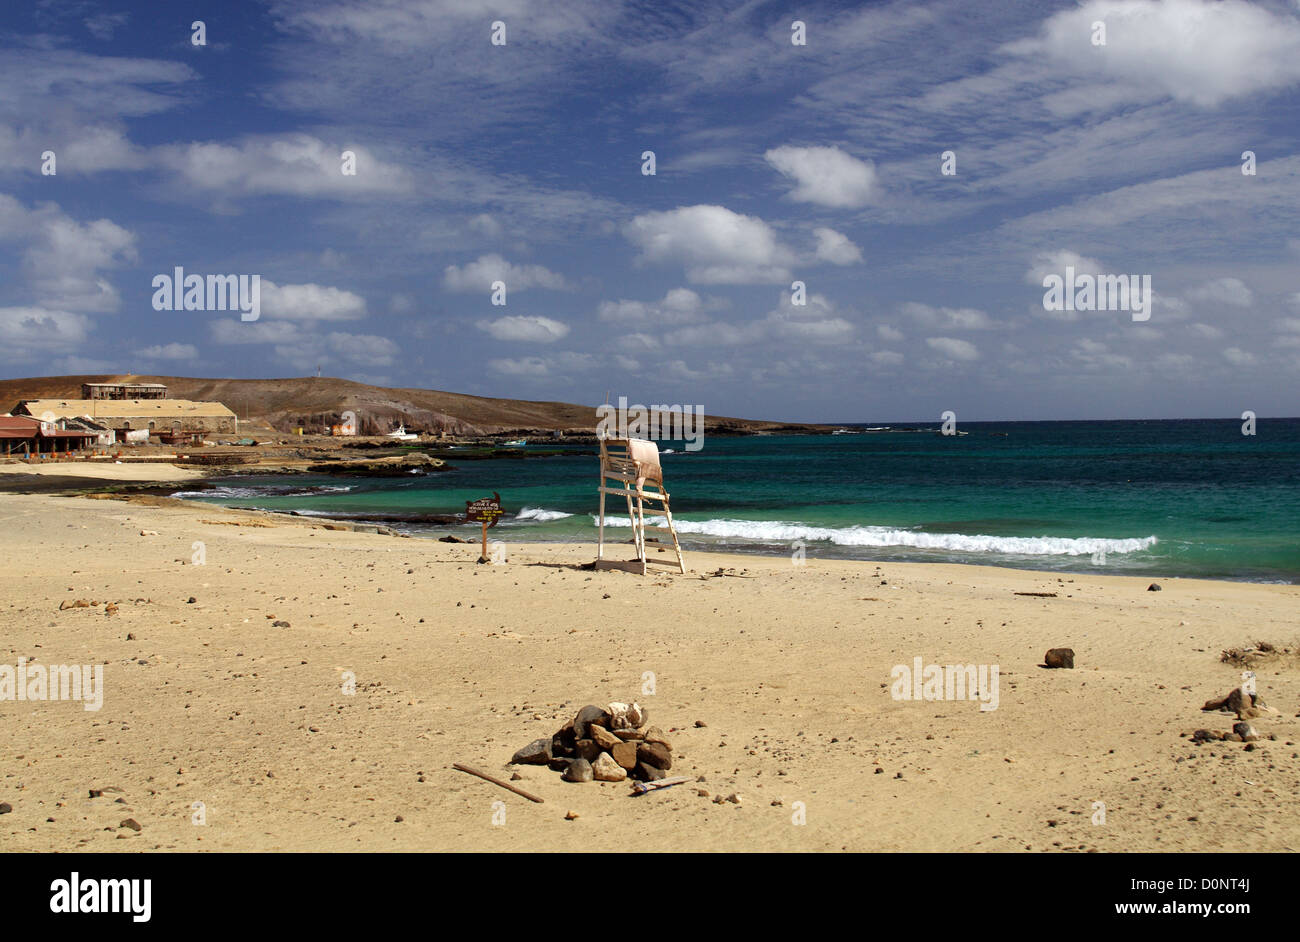 Turtle nesting beach in Pedra de Lume - Island of Sal, Cape Verde Stock Photo